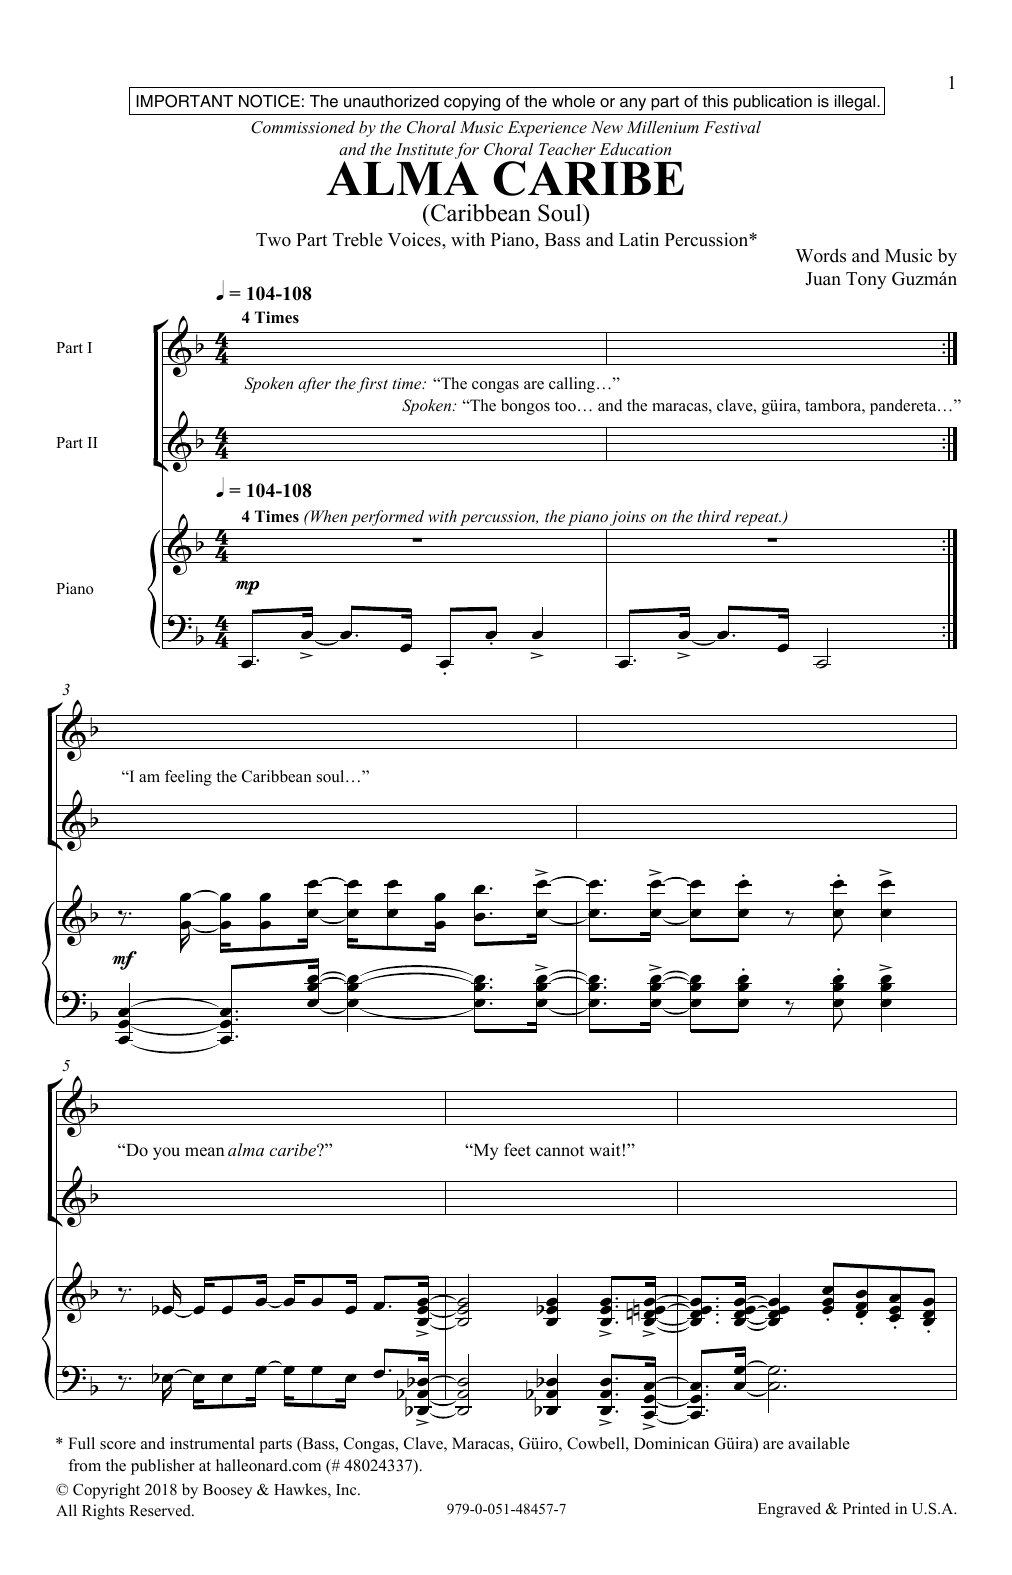 Juan Tony Guzman Alma Caribe (Caribbean Soul) Sheet Music Notes & Chords for SATB Choir - Download or Print PDF